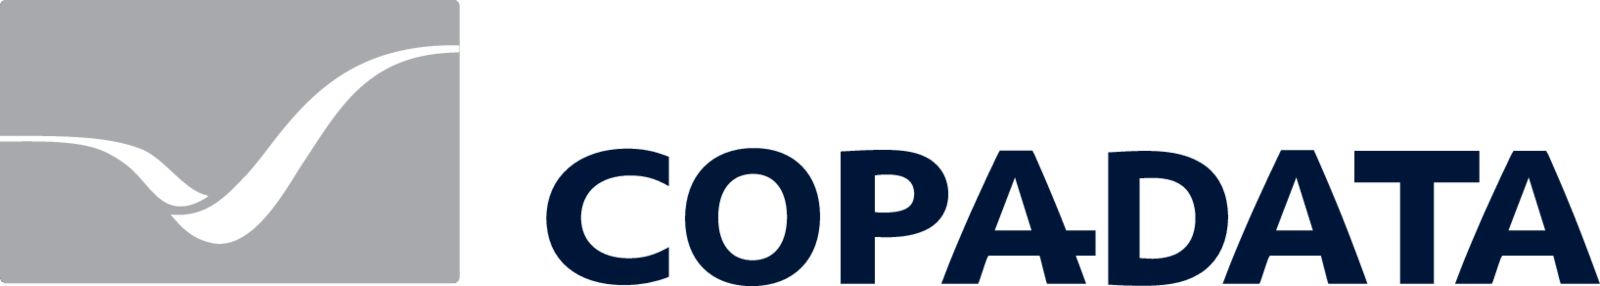 Copadata logo blue1600x1600